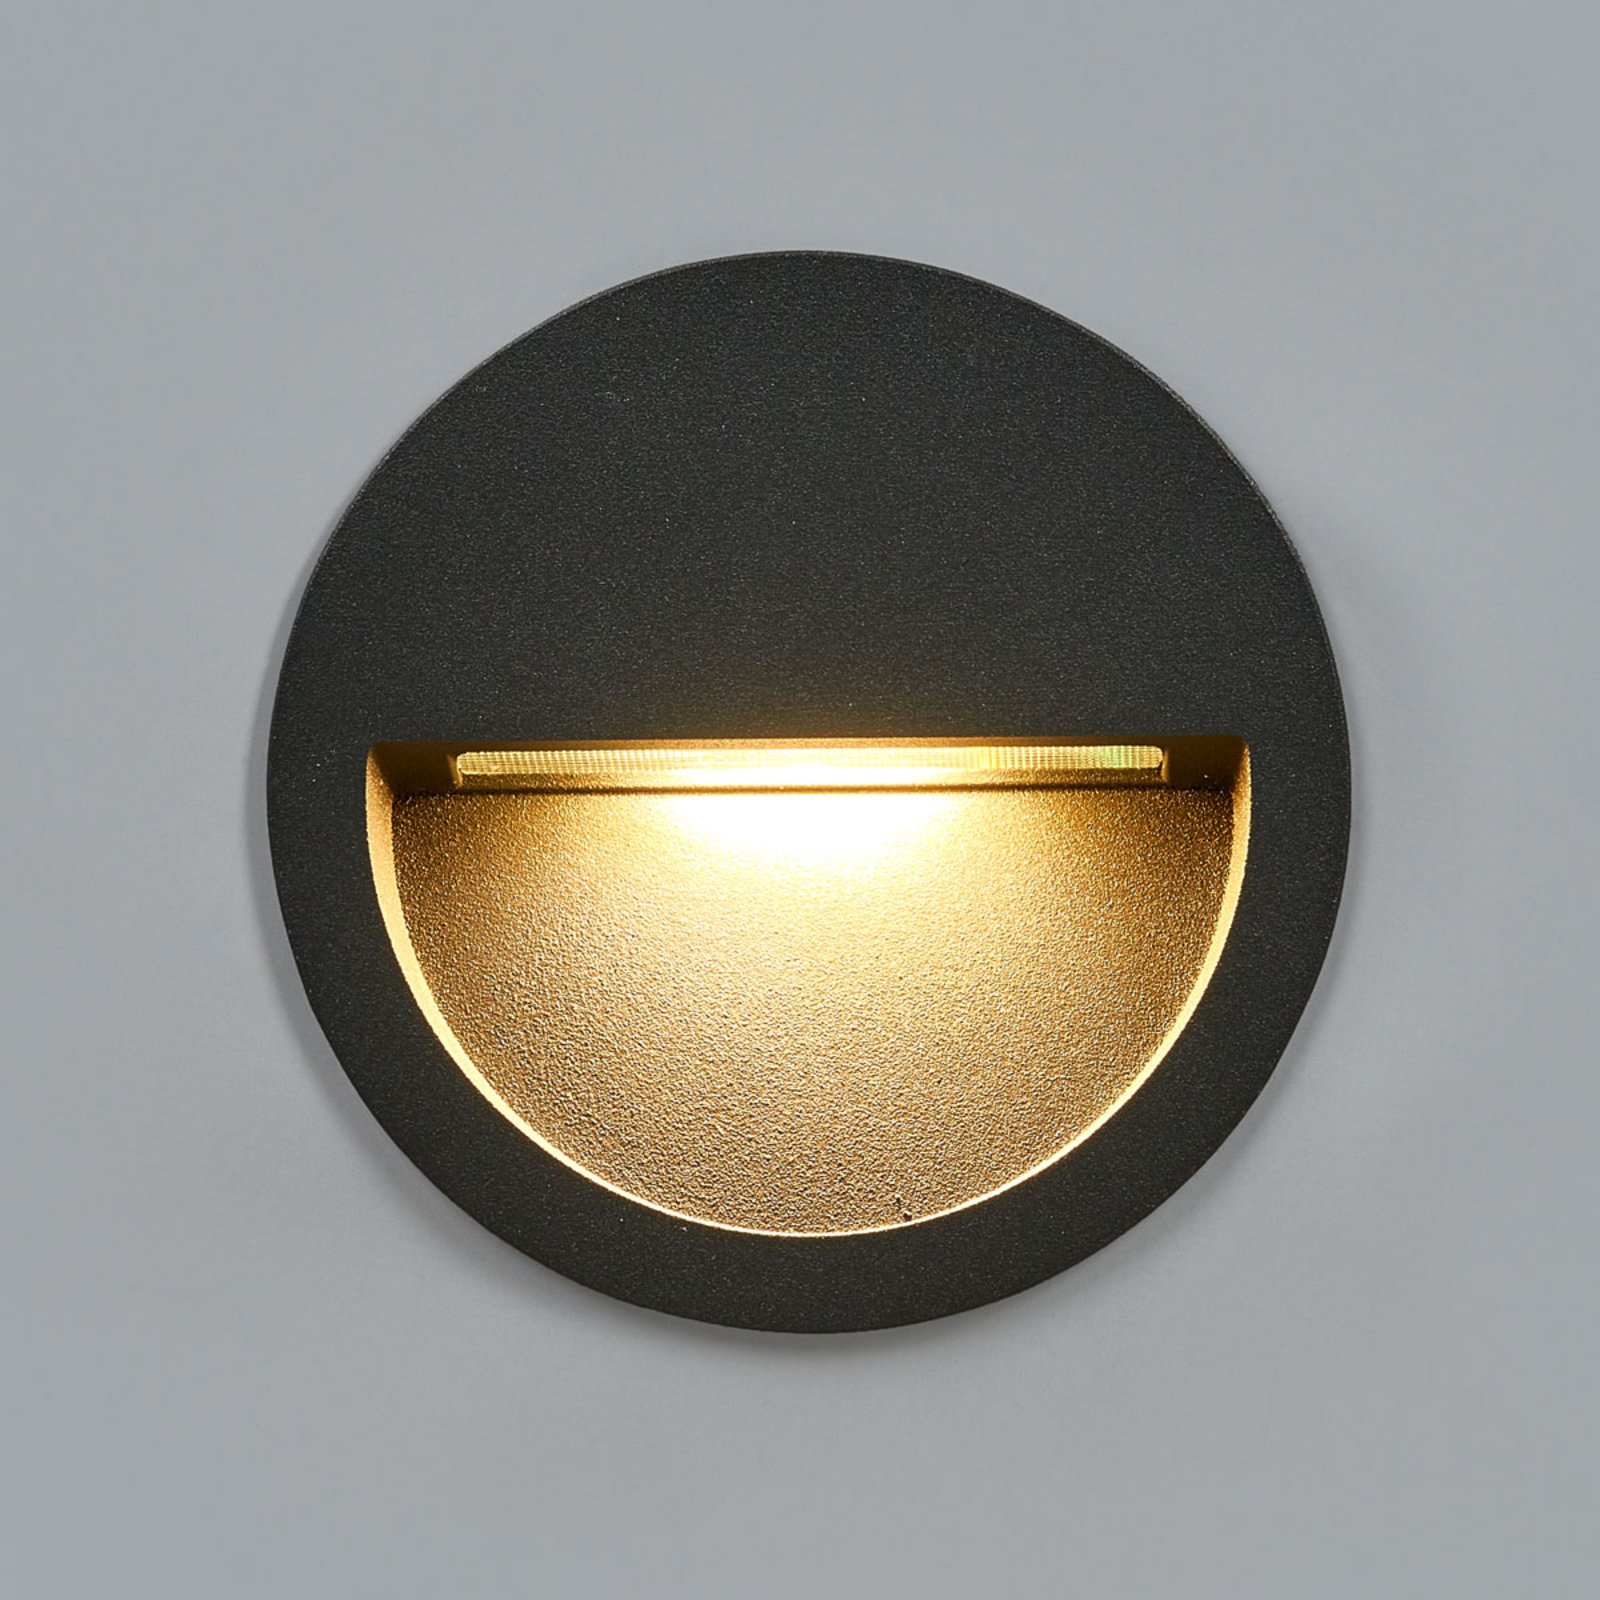 Lucande LED recessed wall light Loya, round, dark grey, outdoor